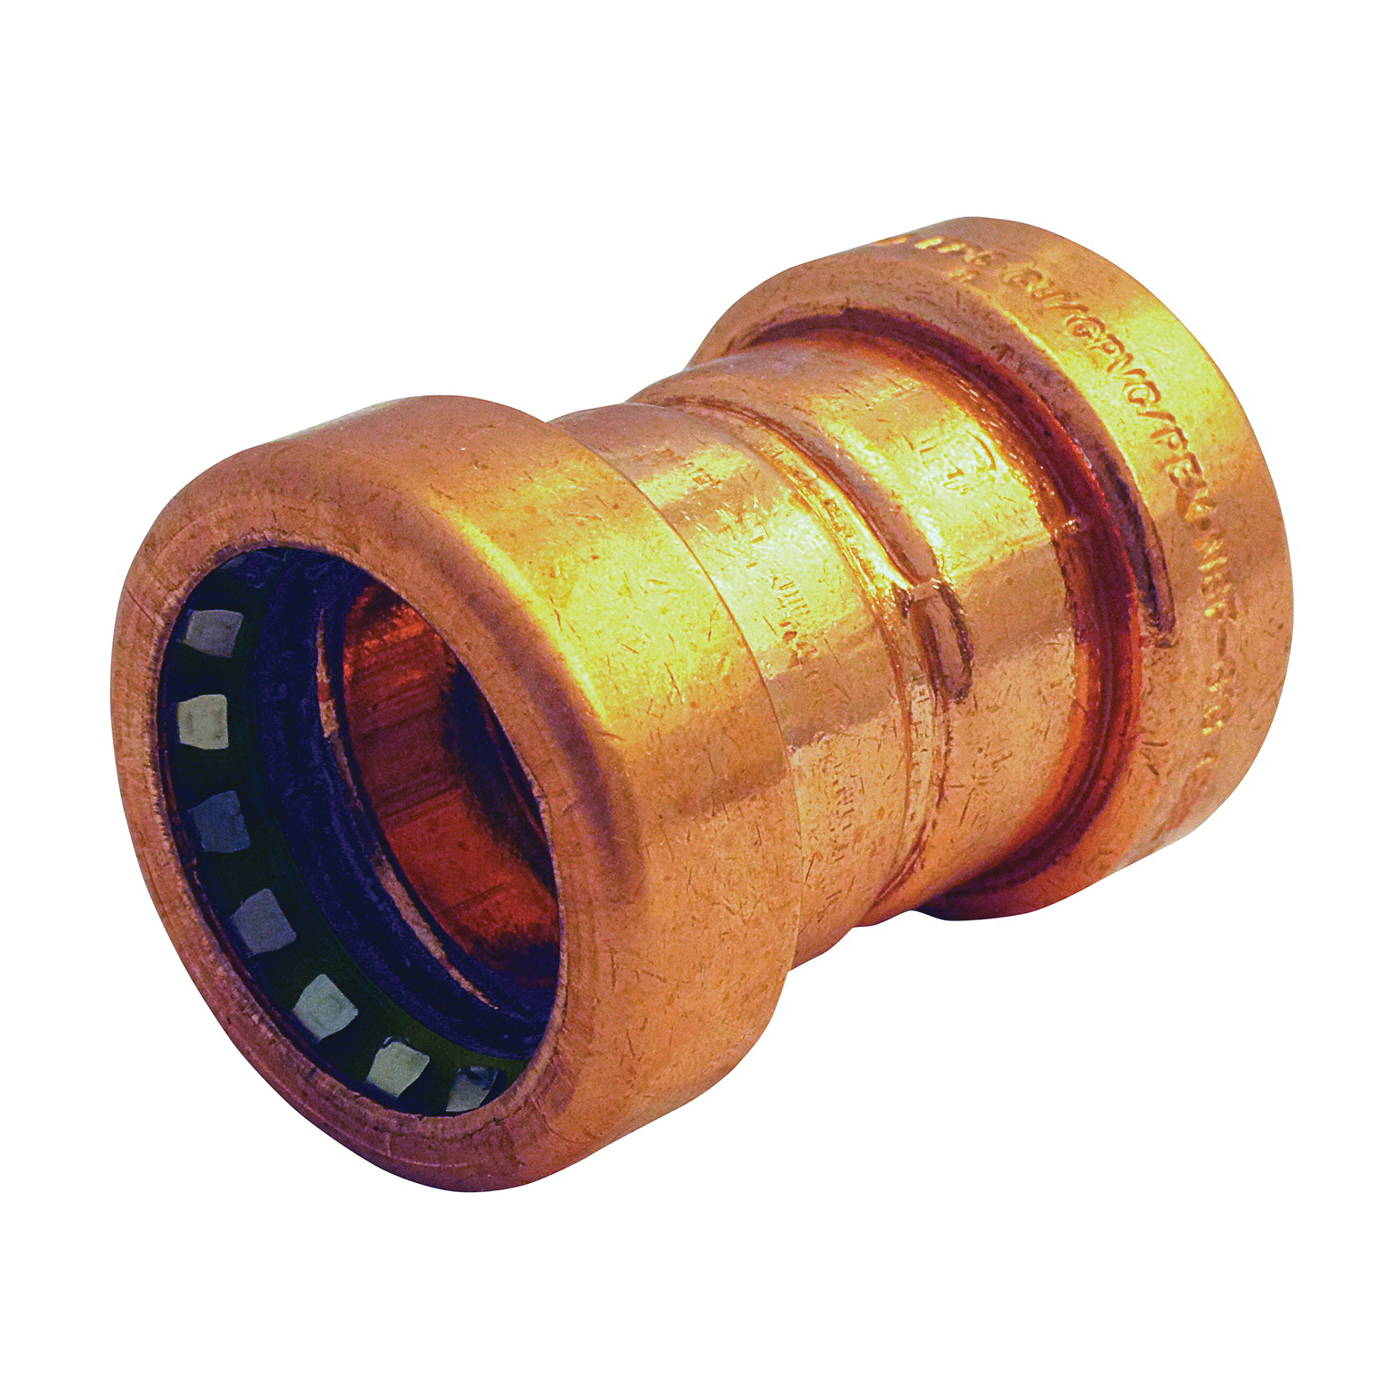 900 Series 10170705 Pipe Coupling, 3/4 in, Copper, 200 psi Pressure